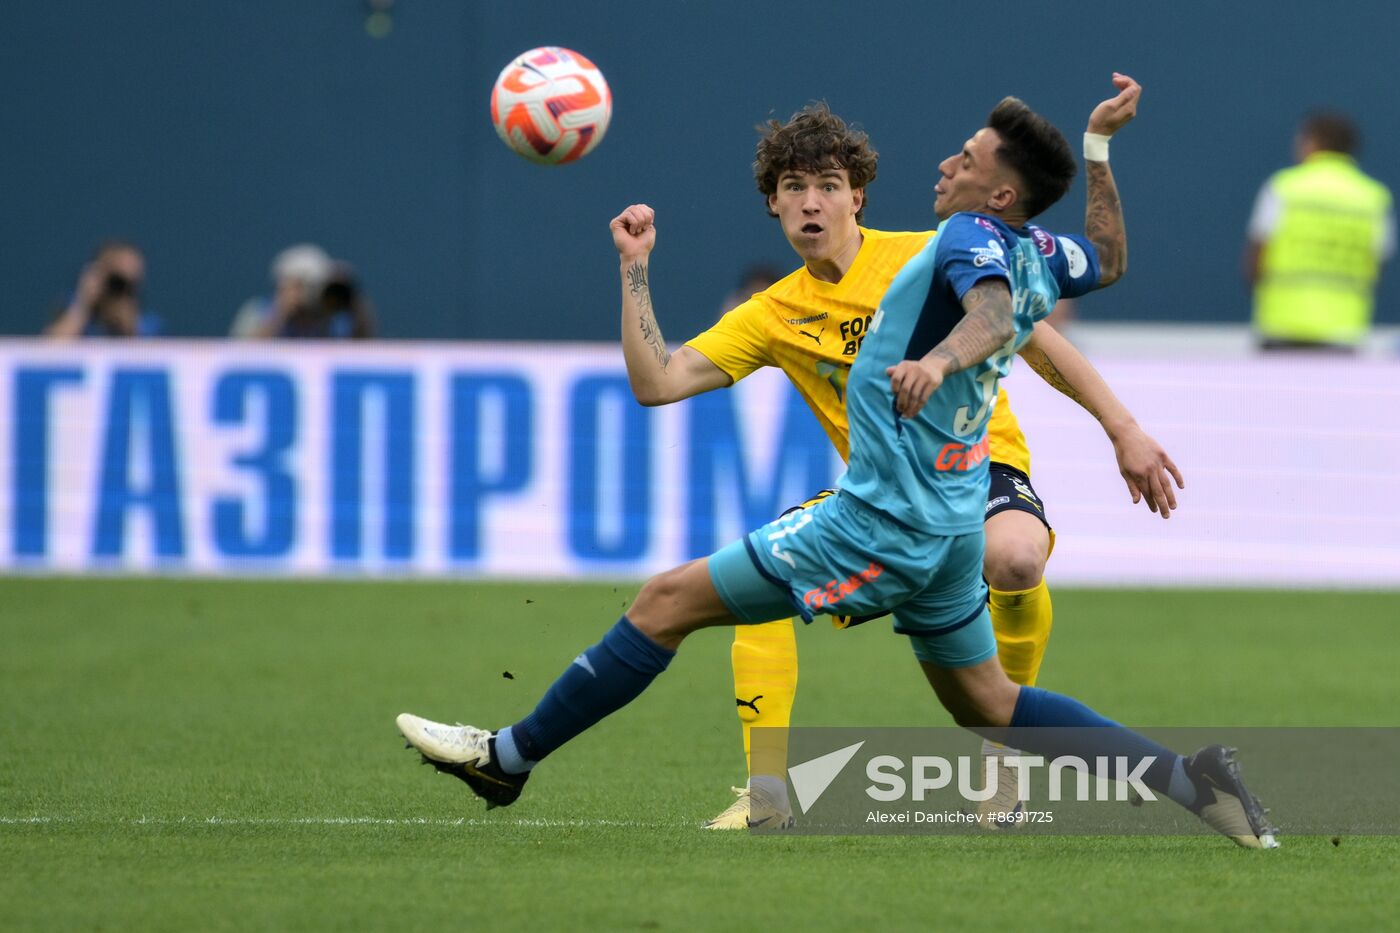 Russia Soccer Premier-League Zenit - Rostov